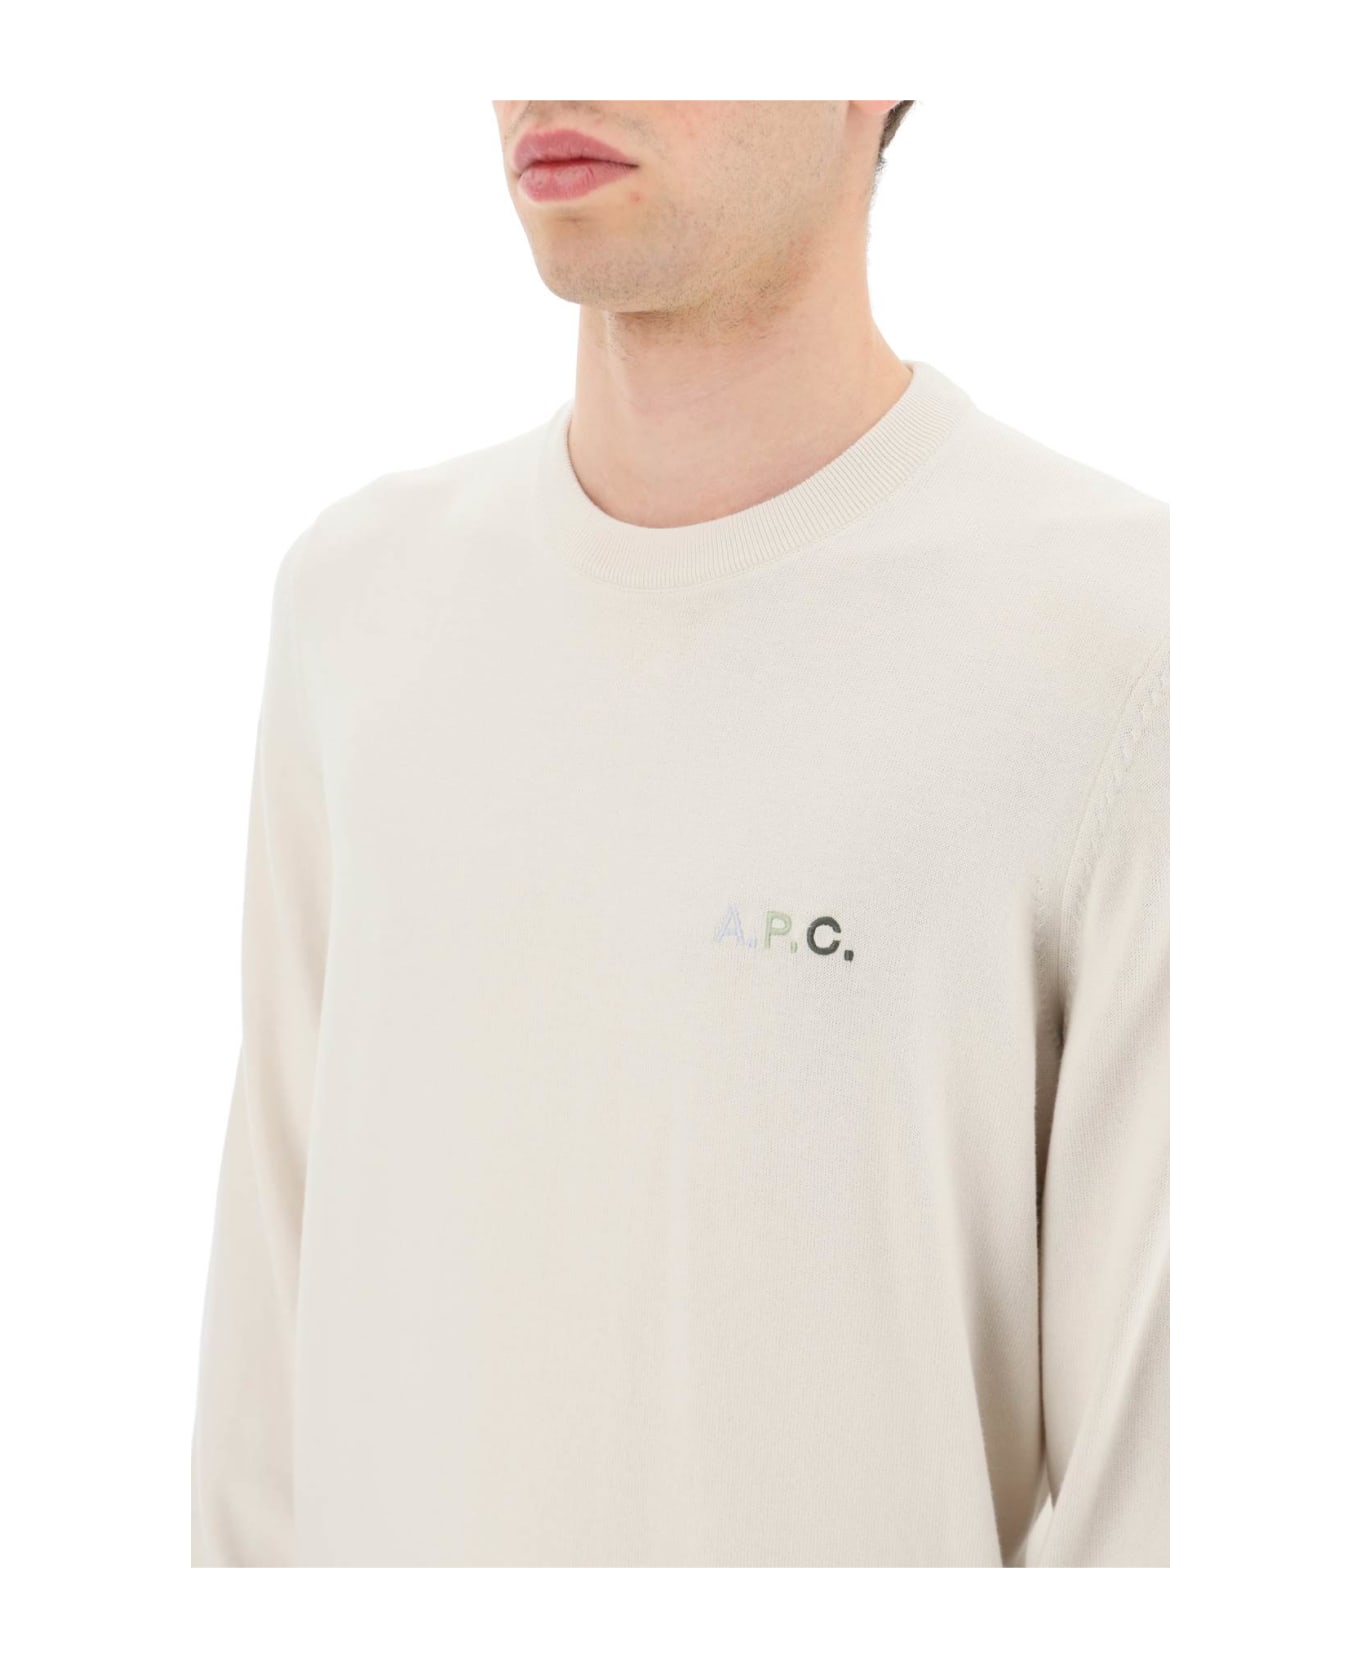 A.P.C. Grey Crewneck Sweater With Mini Logo - Beige ニットウェア